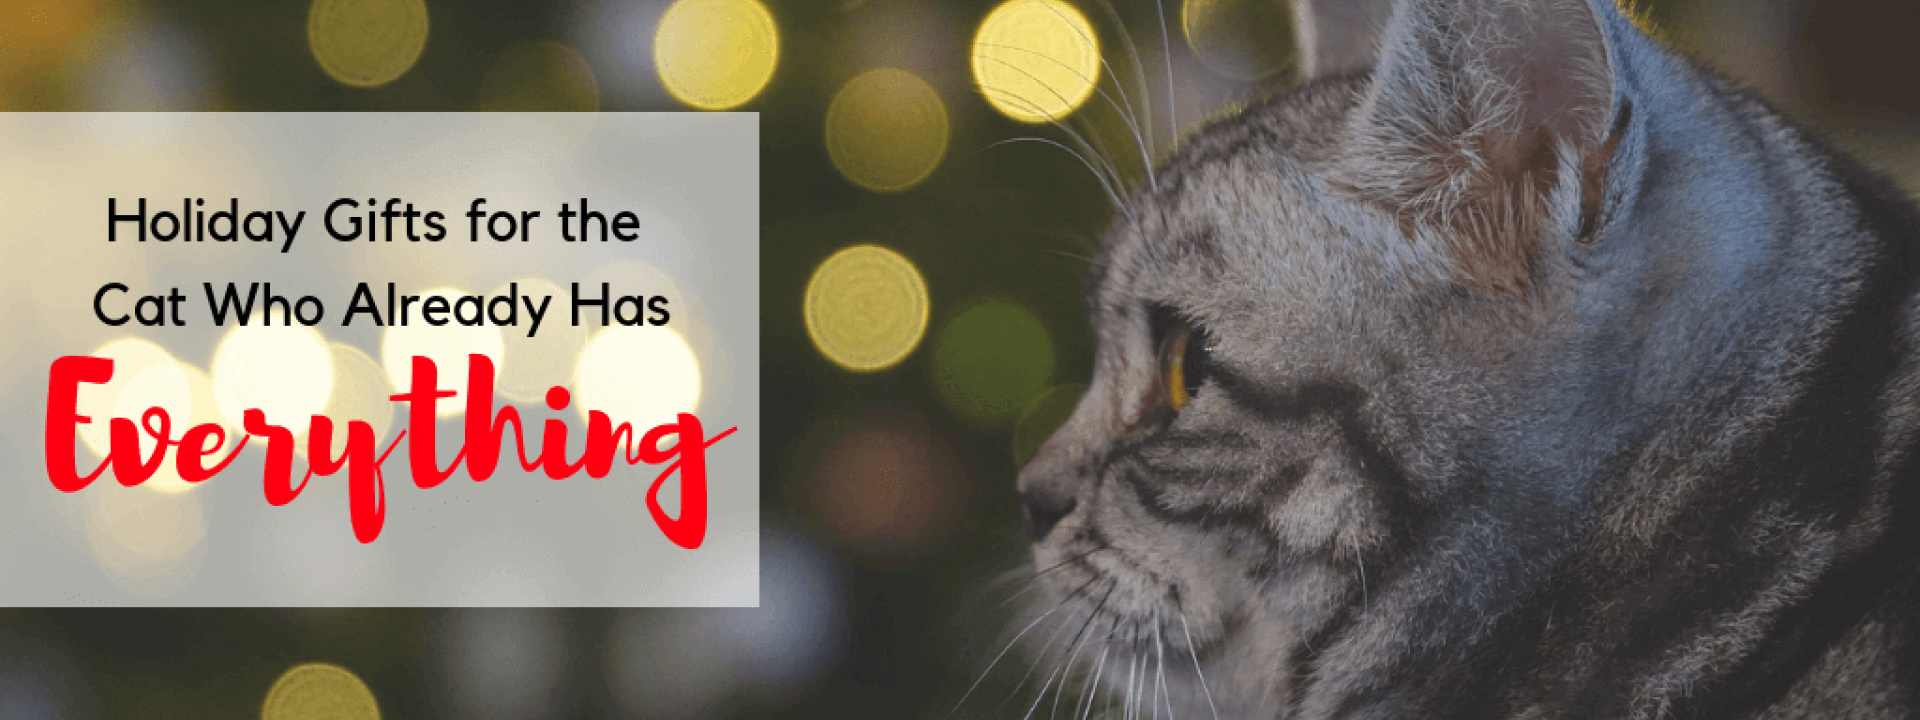 Cat-gifts-blog-header.png